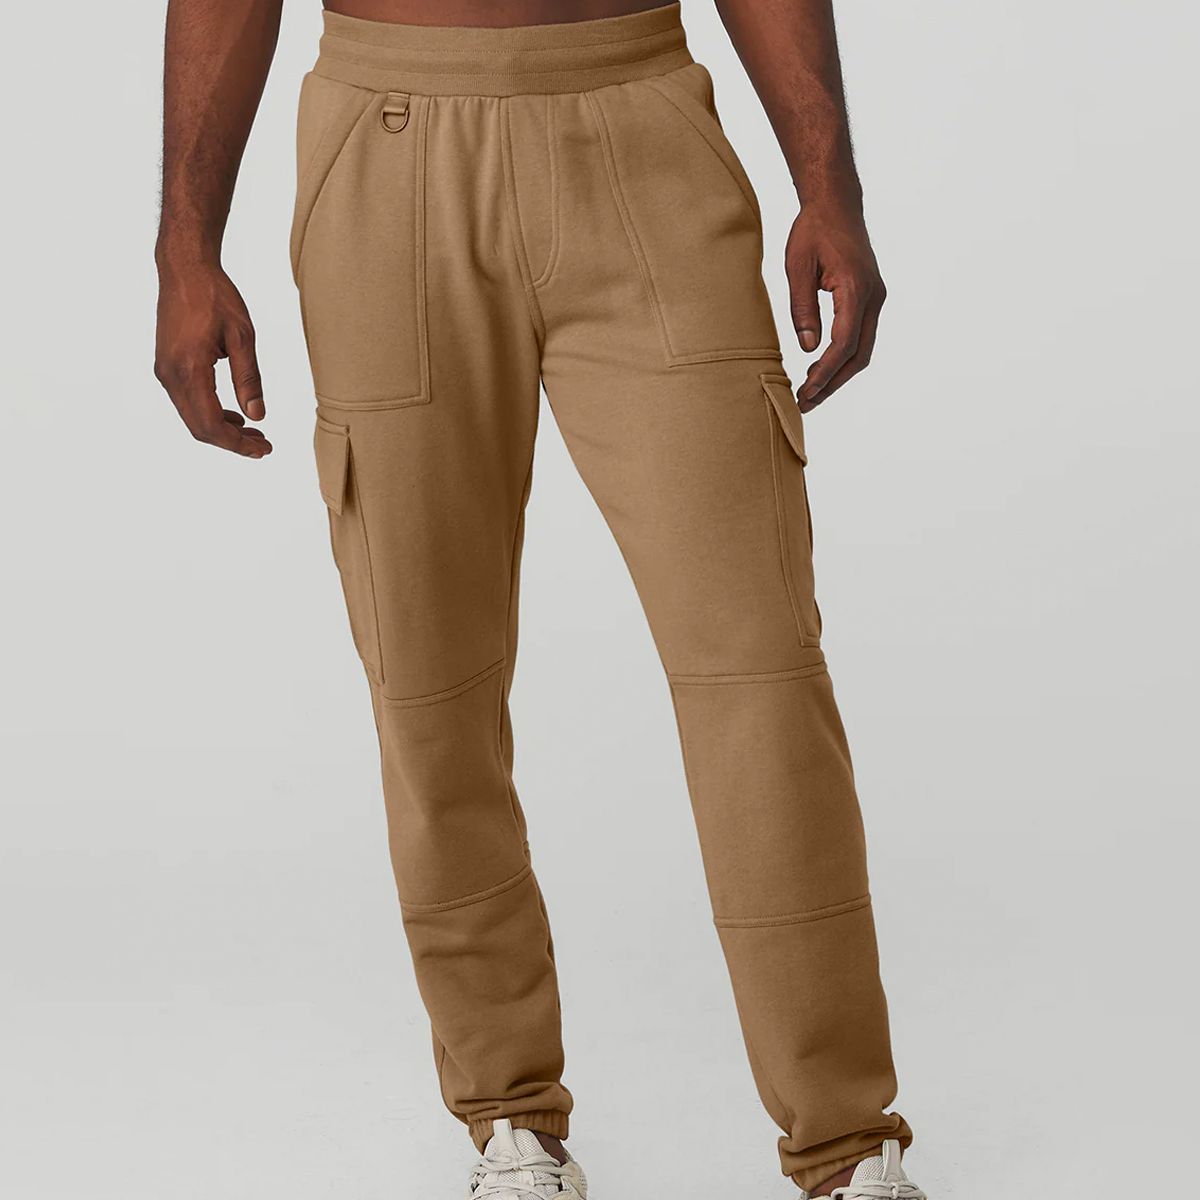 Slim Cargo Pants Size 36 Perfect Condition #cargos... - Depop